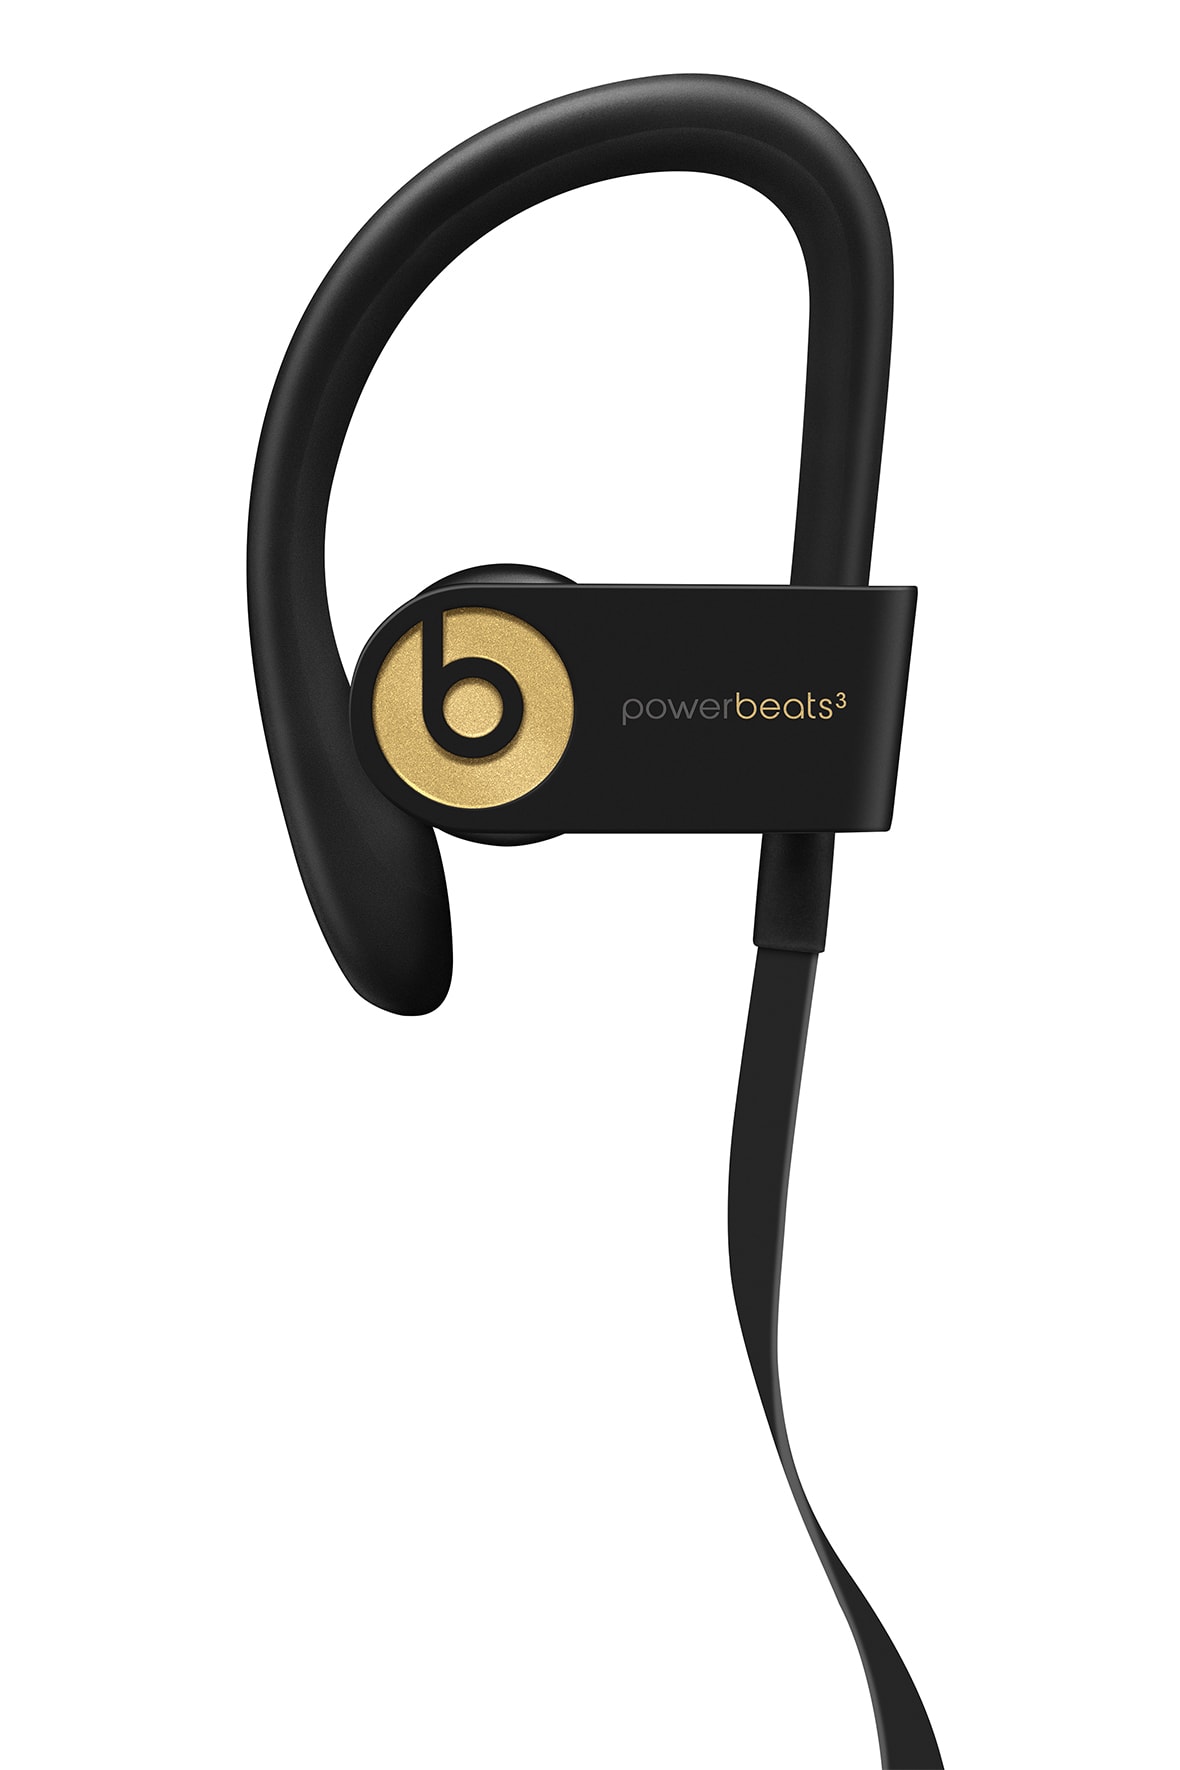 Beats by Dr. Dre 推出黑金配色 Powerbeats3 Wireless 無線耳機